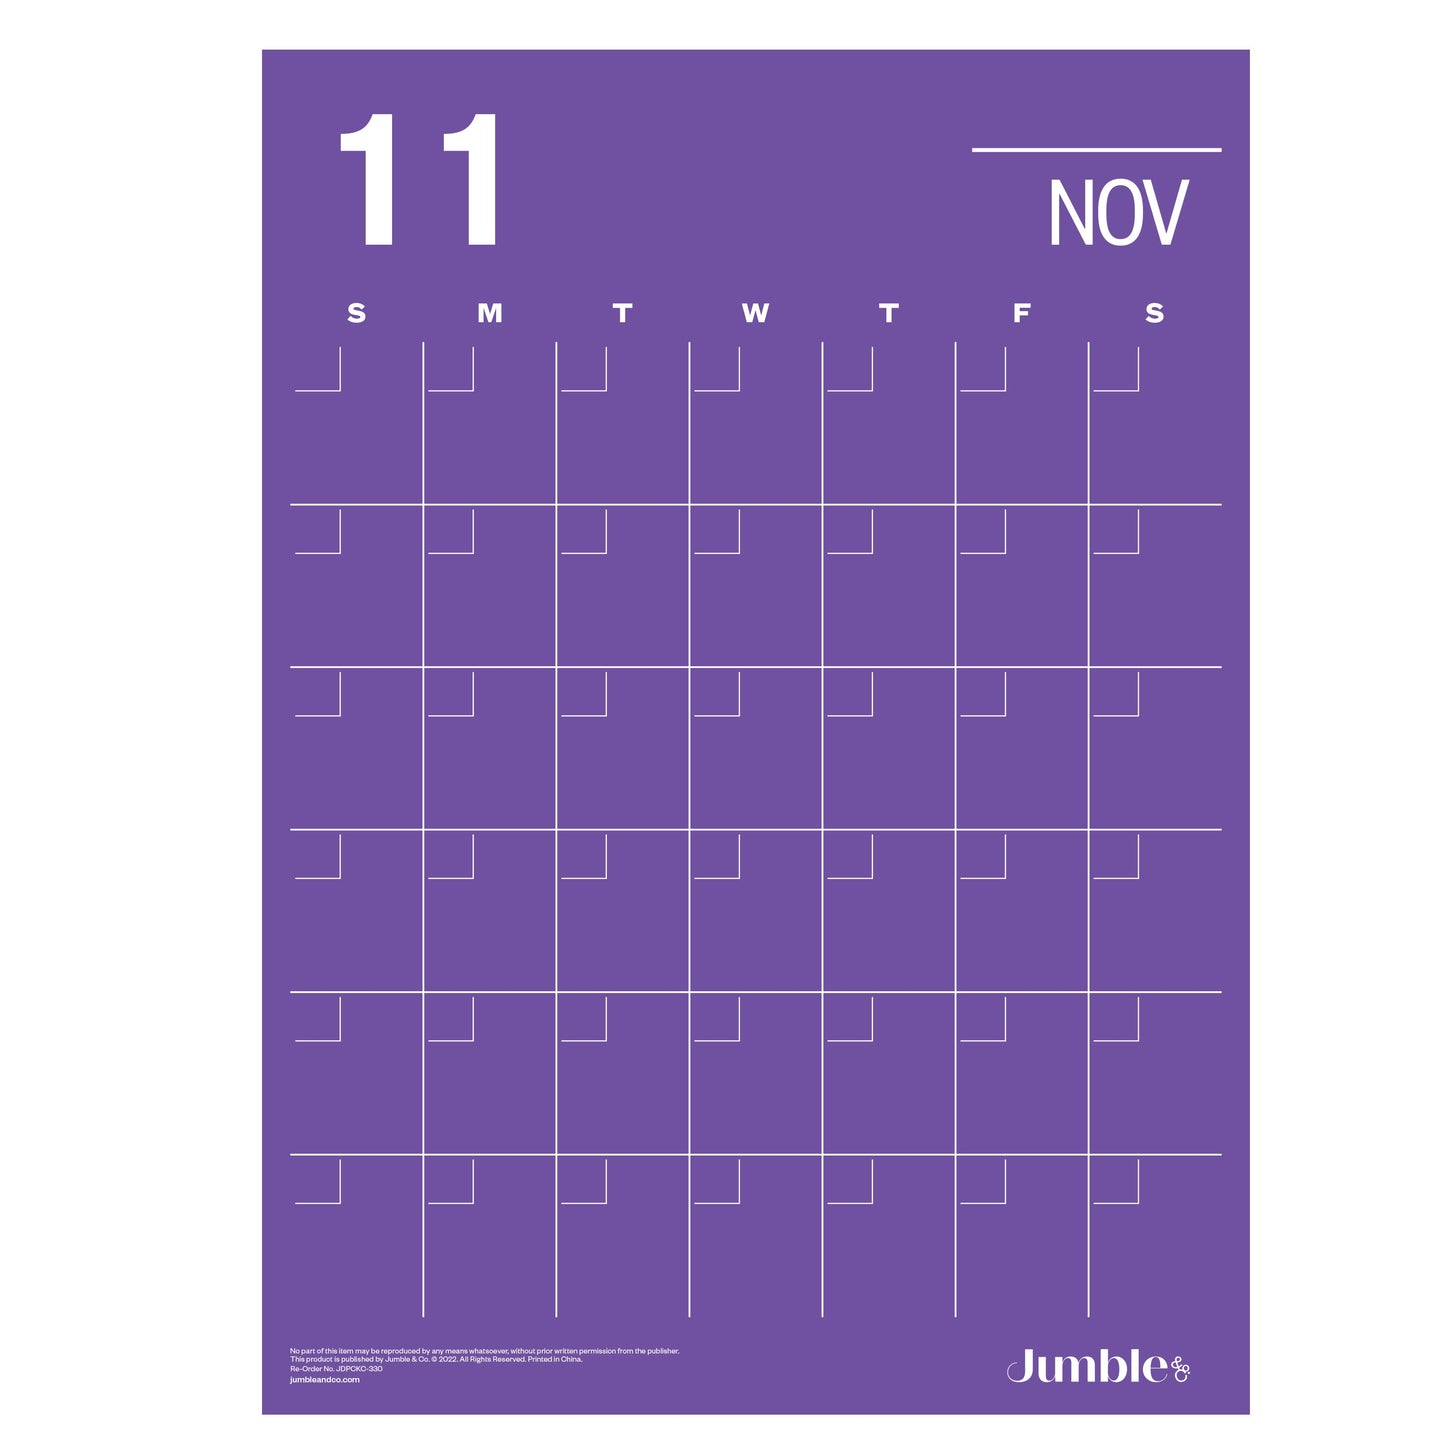 Dippy A3 Oversize Undated Wall Calendar